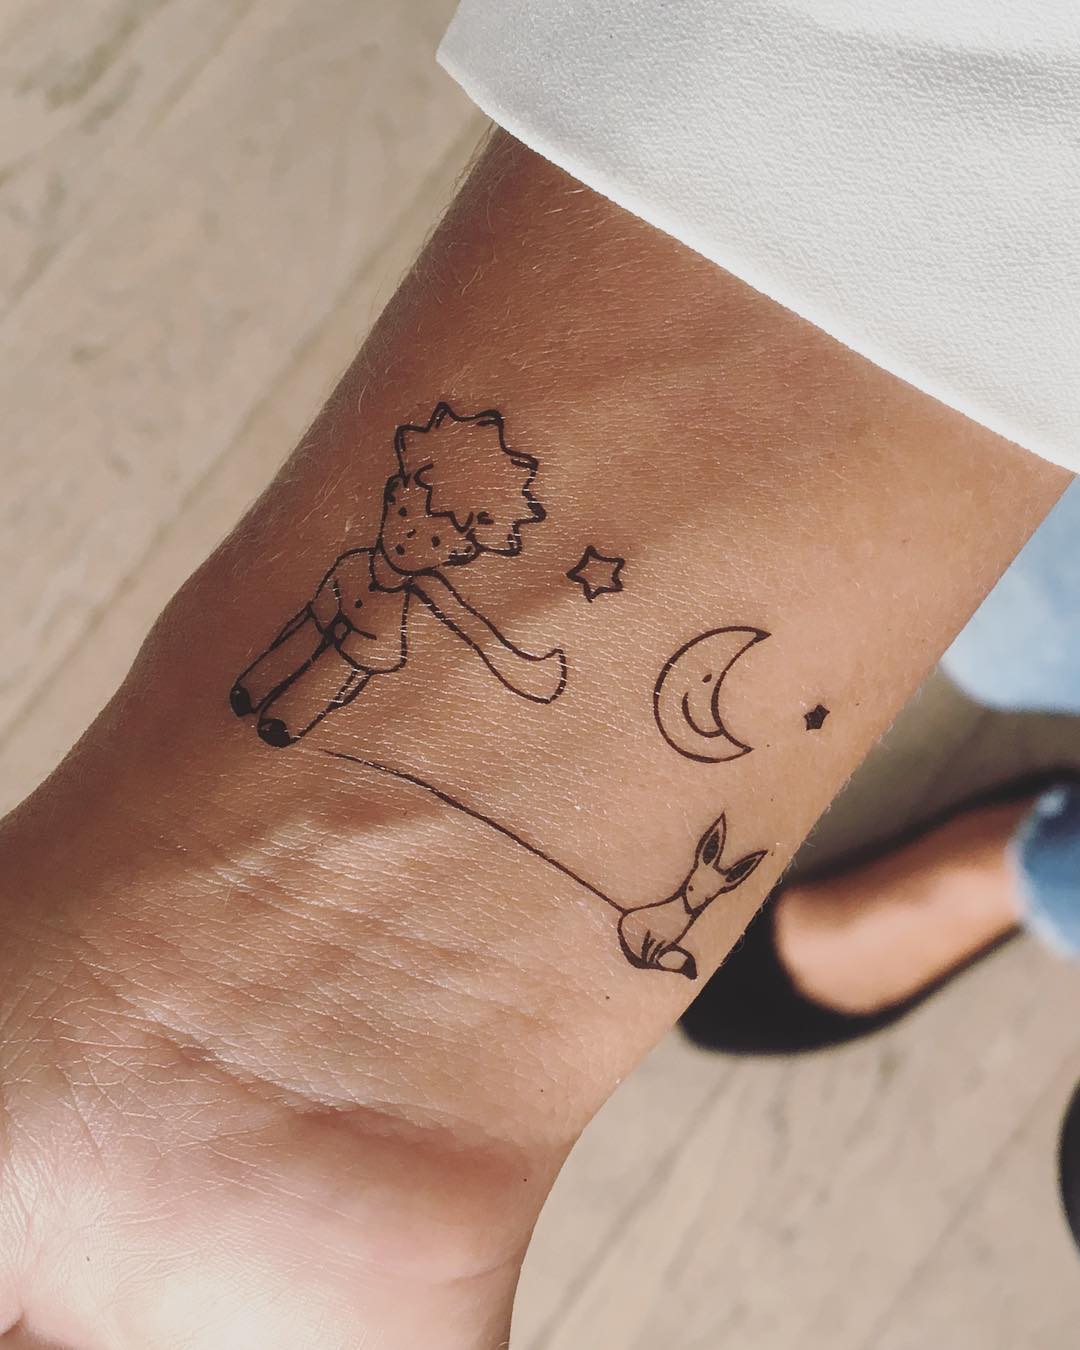 Hanzloch Tattoo  The Little Prince     tattoo ink  Facebook